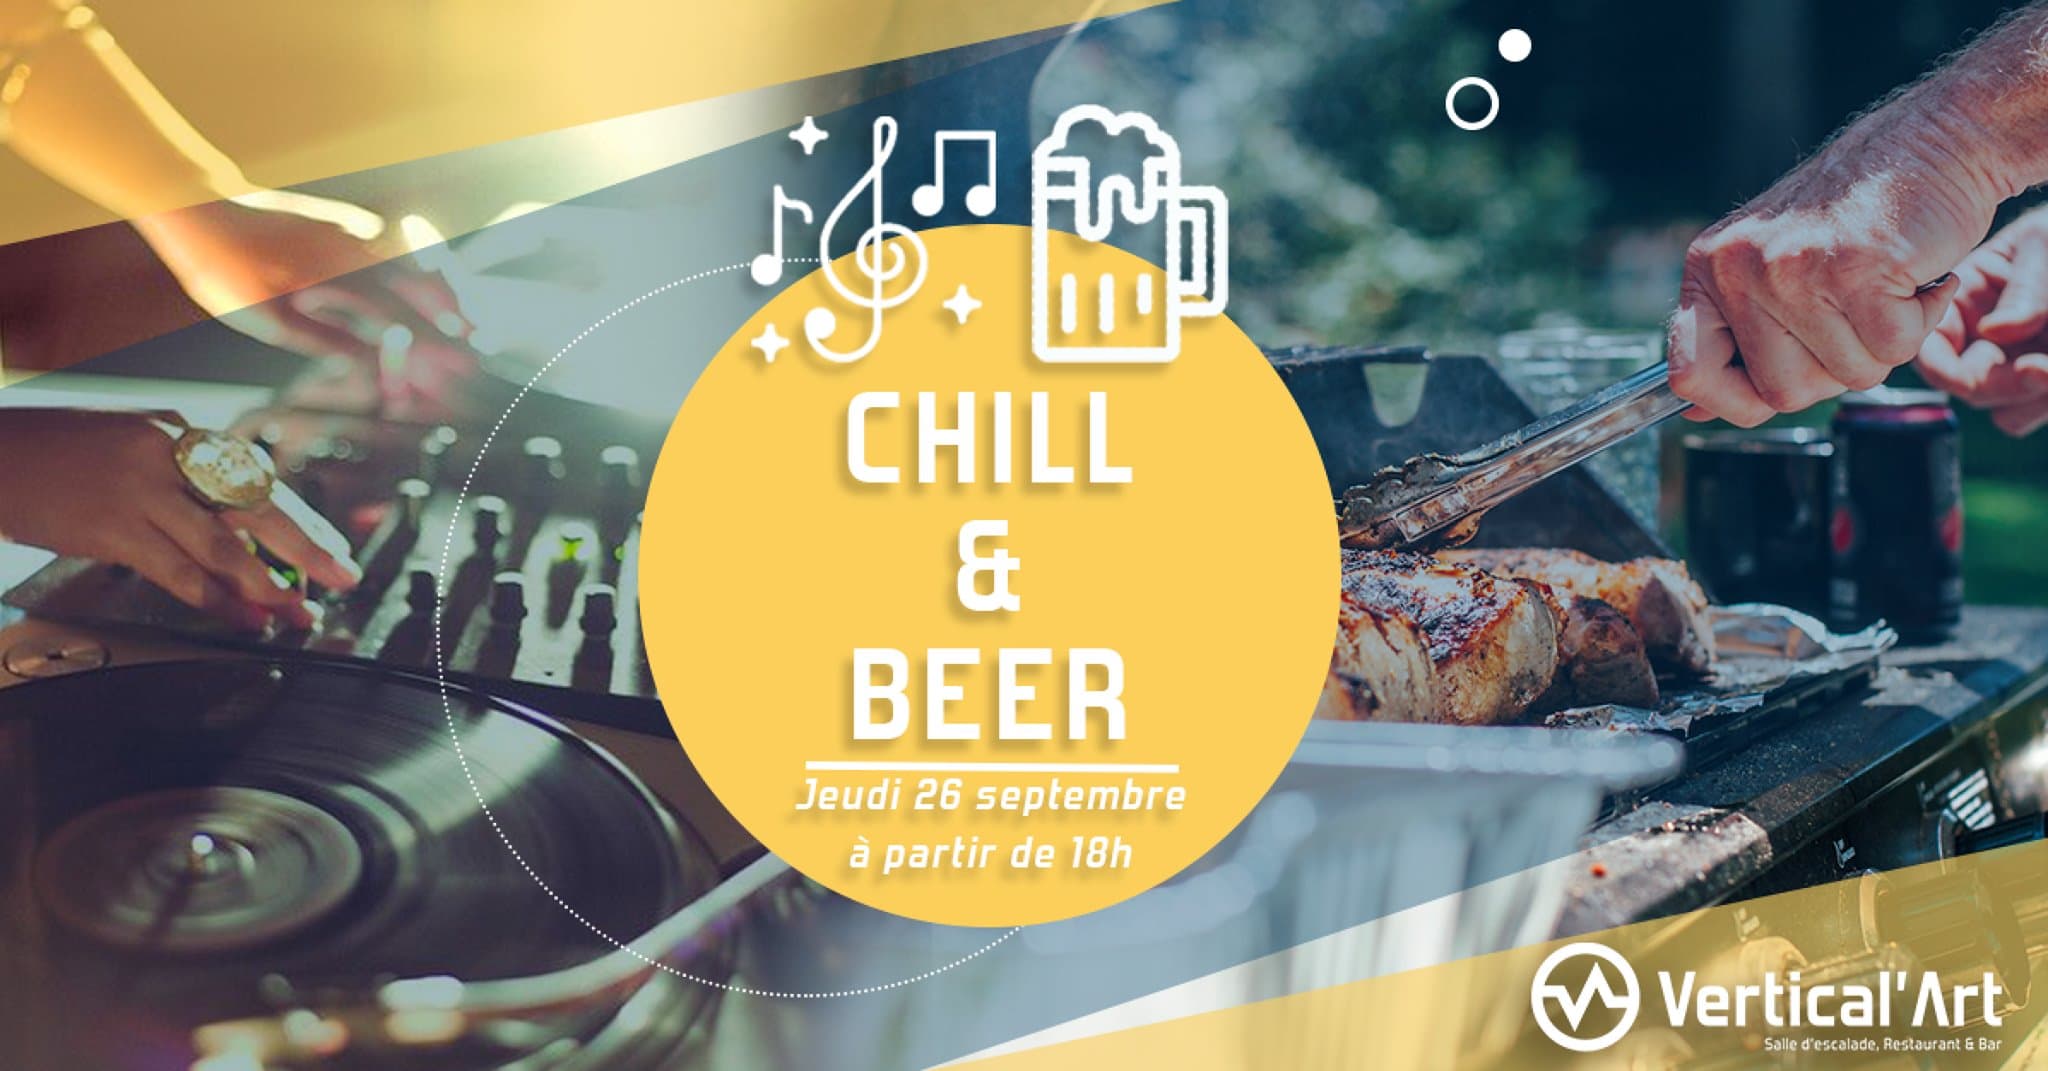 chill & beer - Vertical’Art Nantes - salle d'escalade de bloc - restaurant et bar - DJ set - Barbecue - soirée - news - bières - happy hour